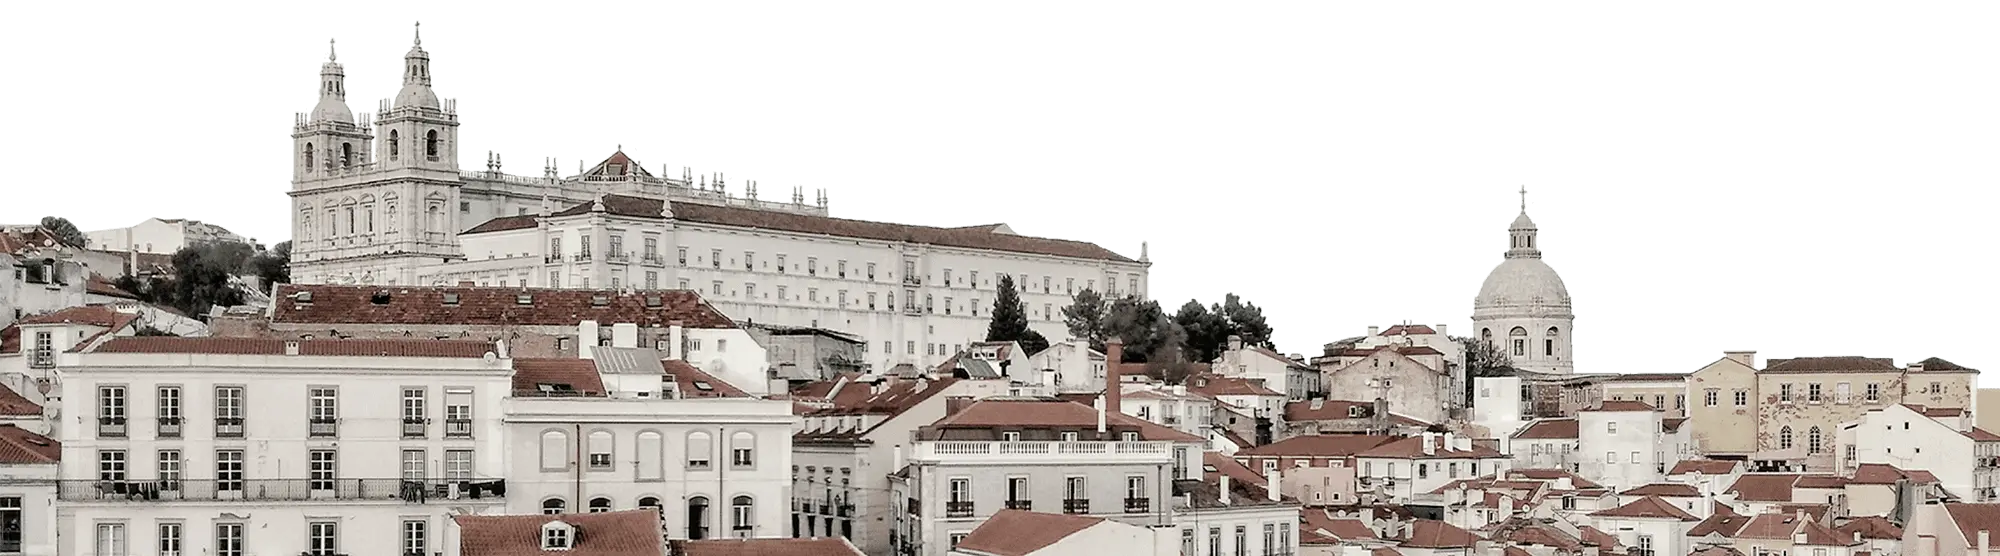 Mandriola de Lisboa Cidade